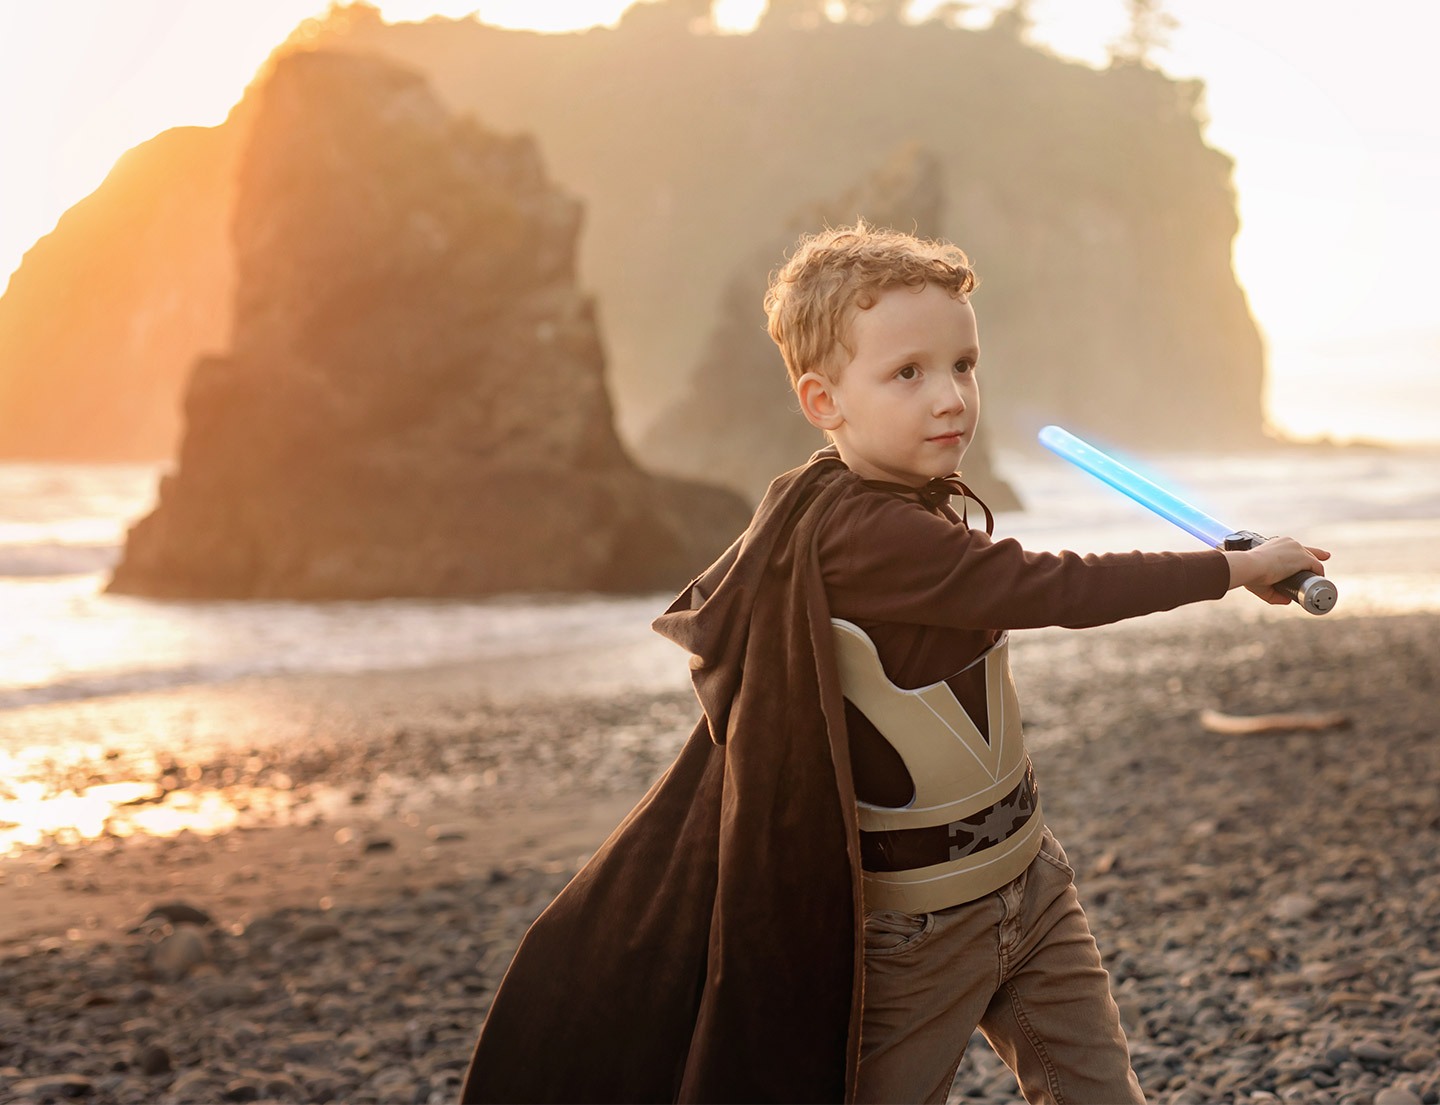 Liam dressed as Obi-wan Kenobi, wielding a lightsaber